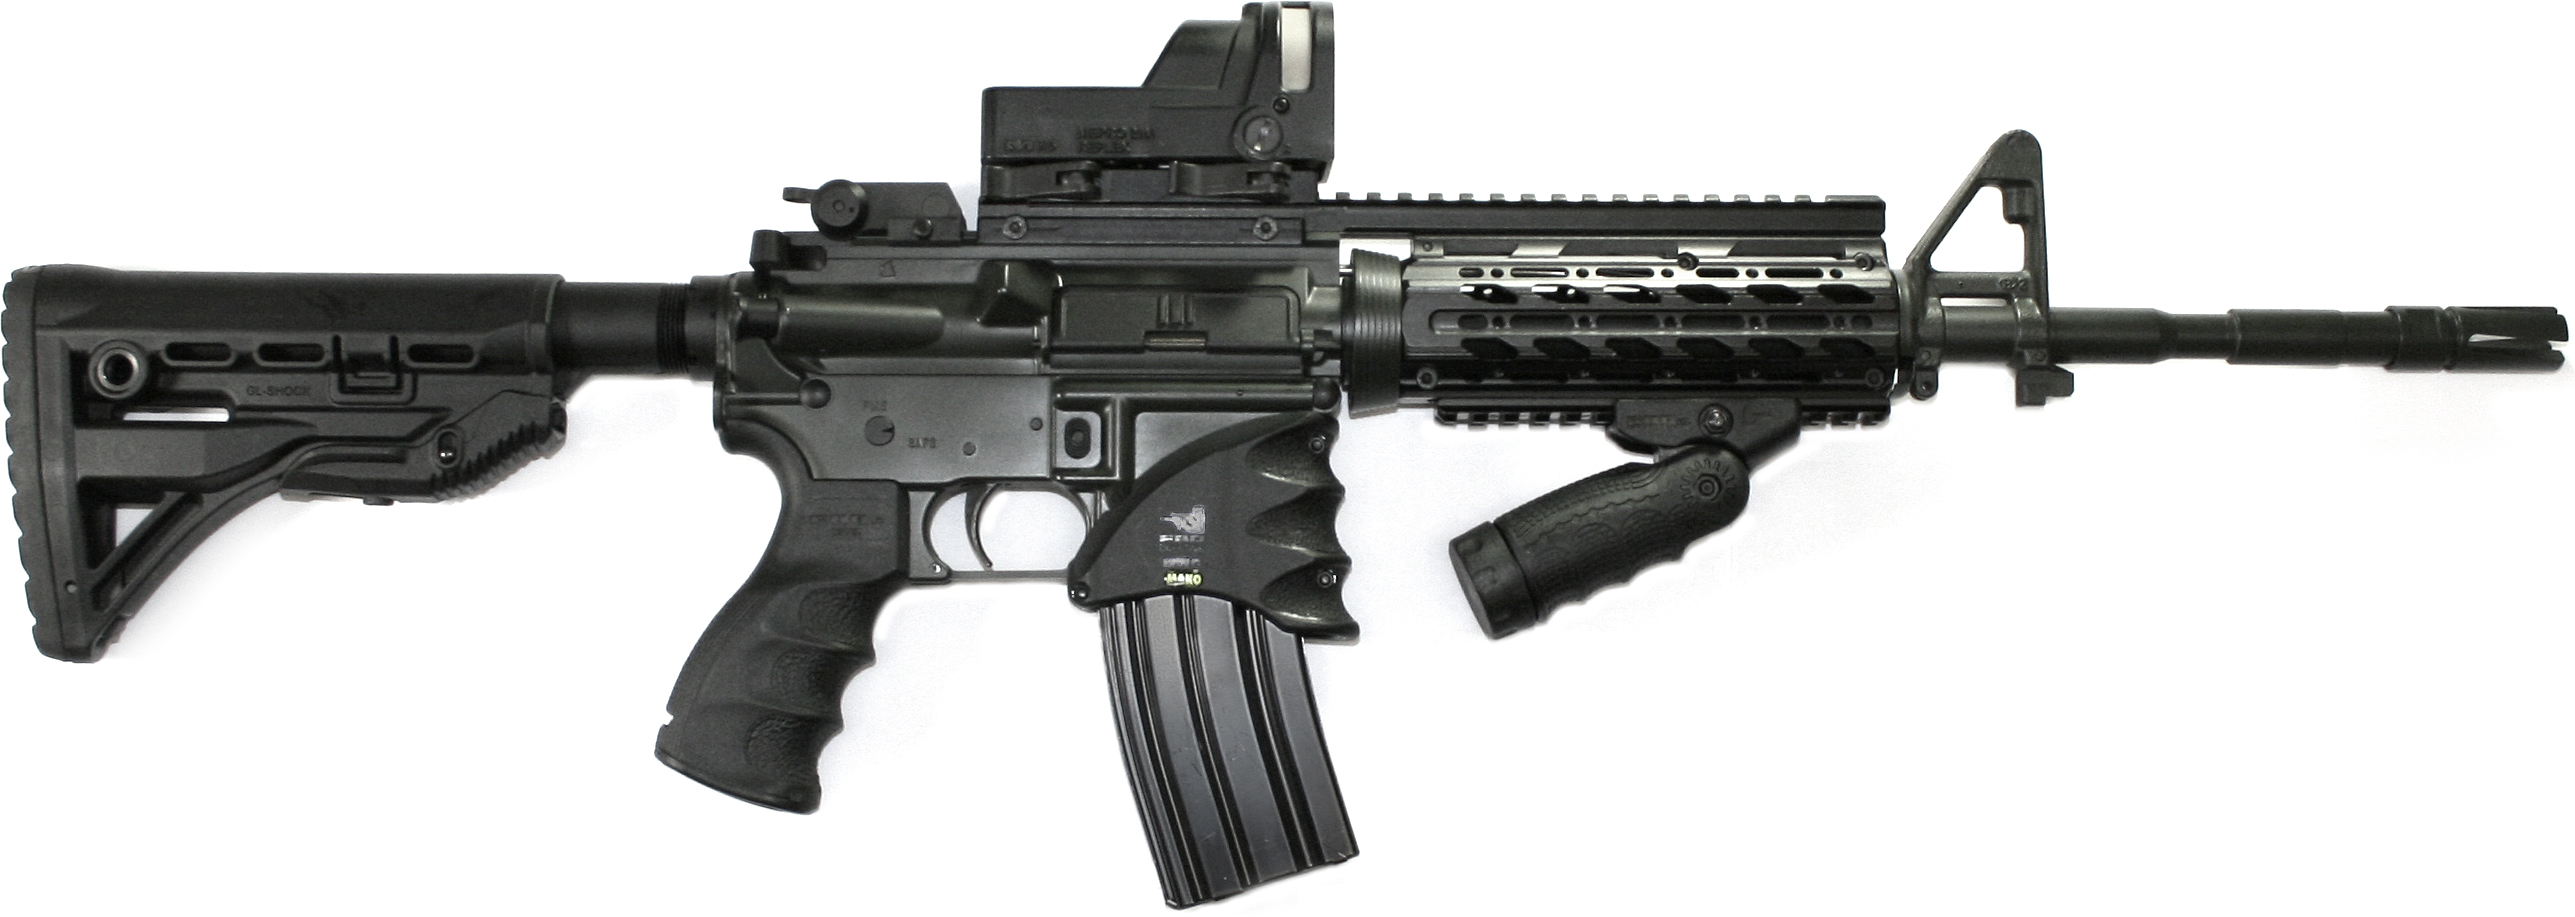 Weapons Colt AR 15 2575x917